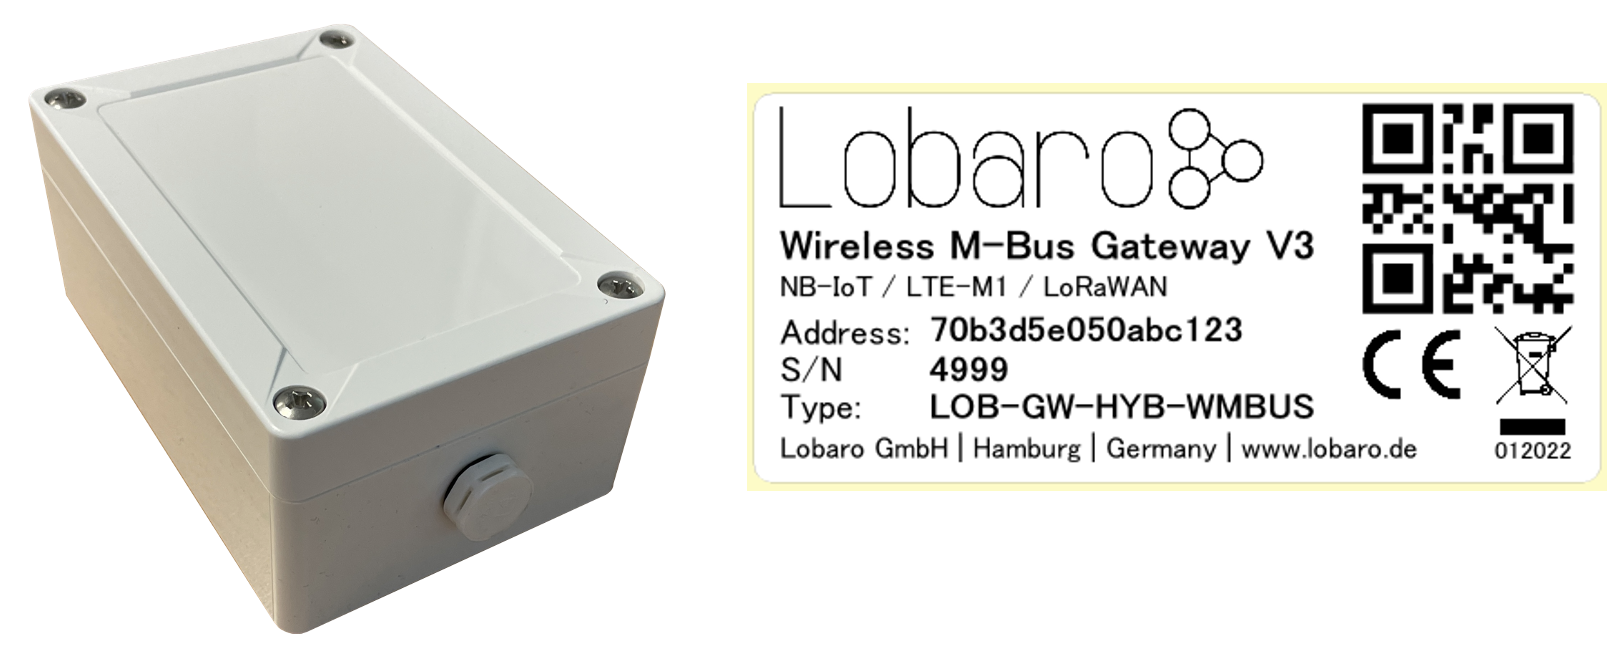 Lobaro Wireless M-Bus Gateway V3